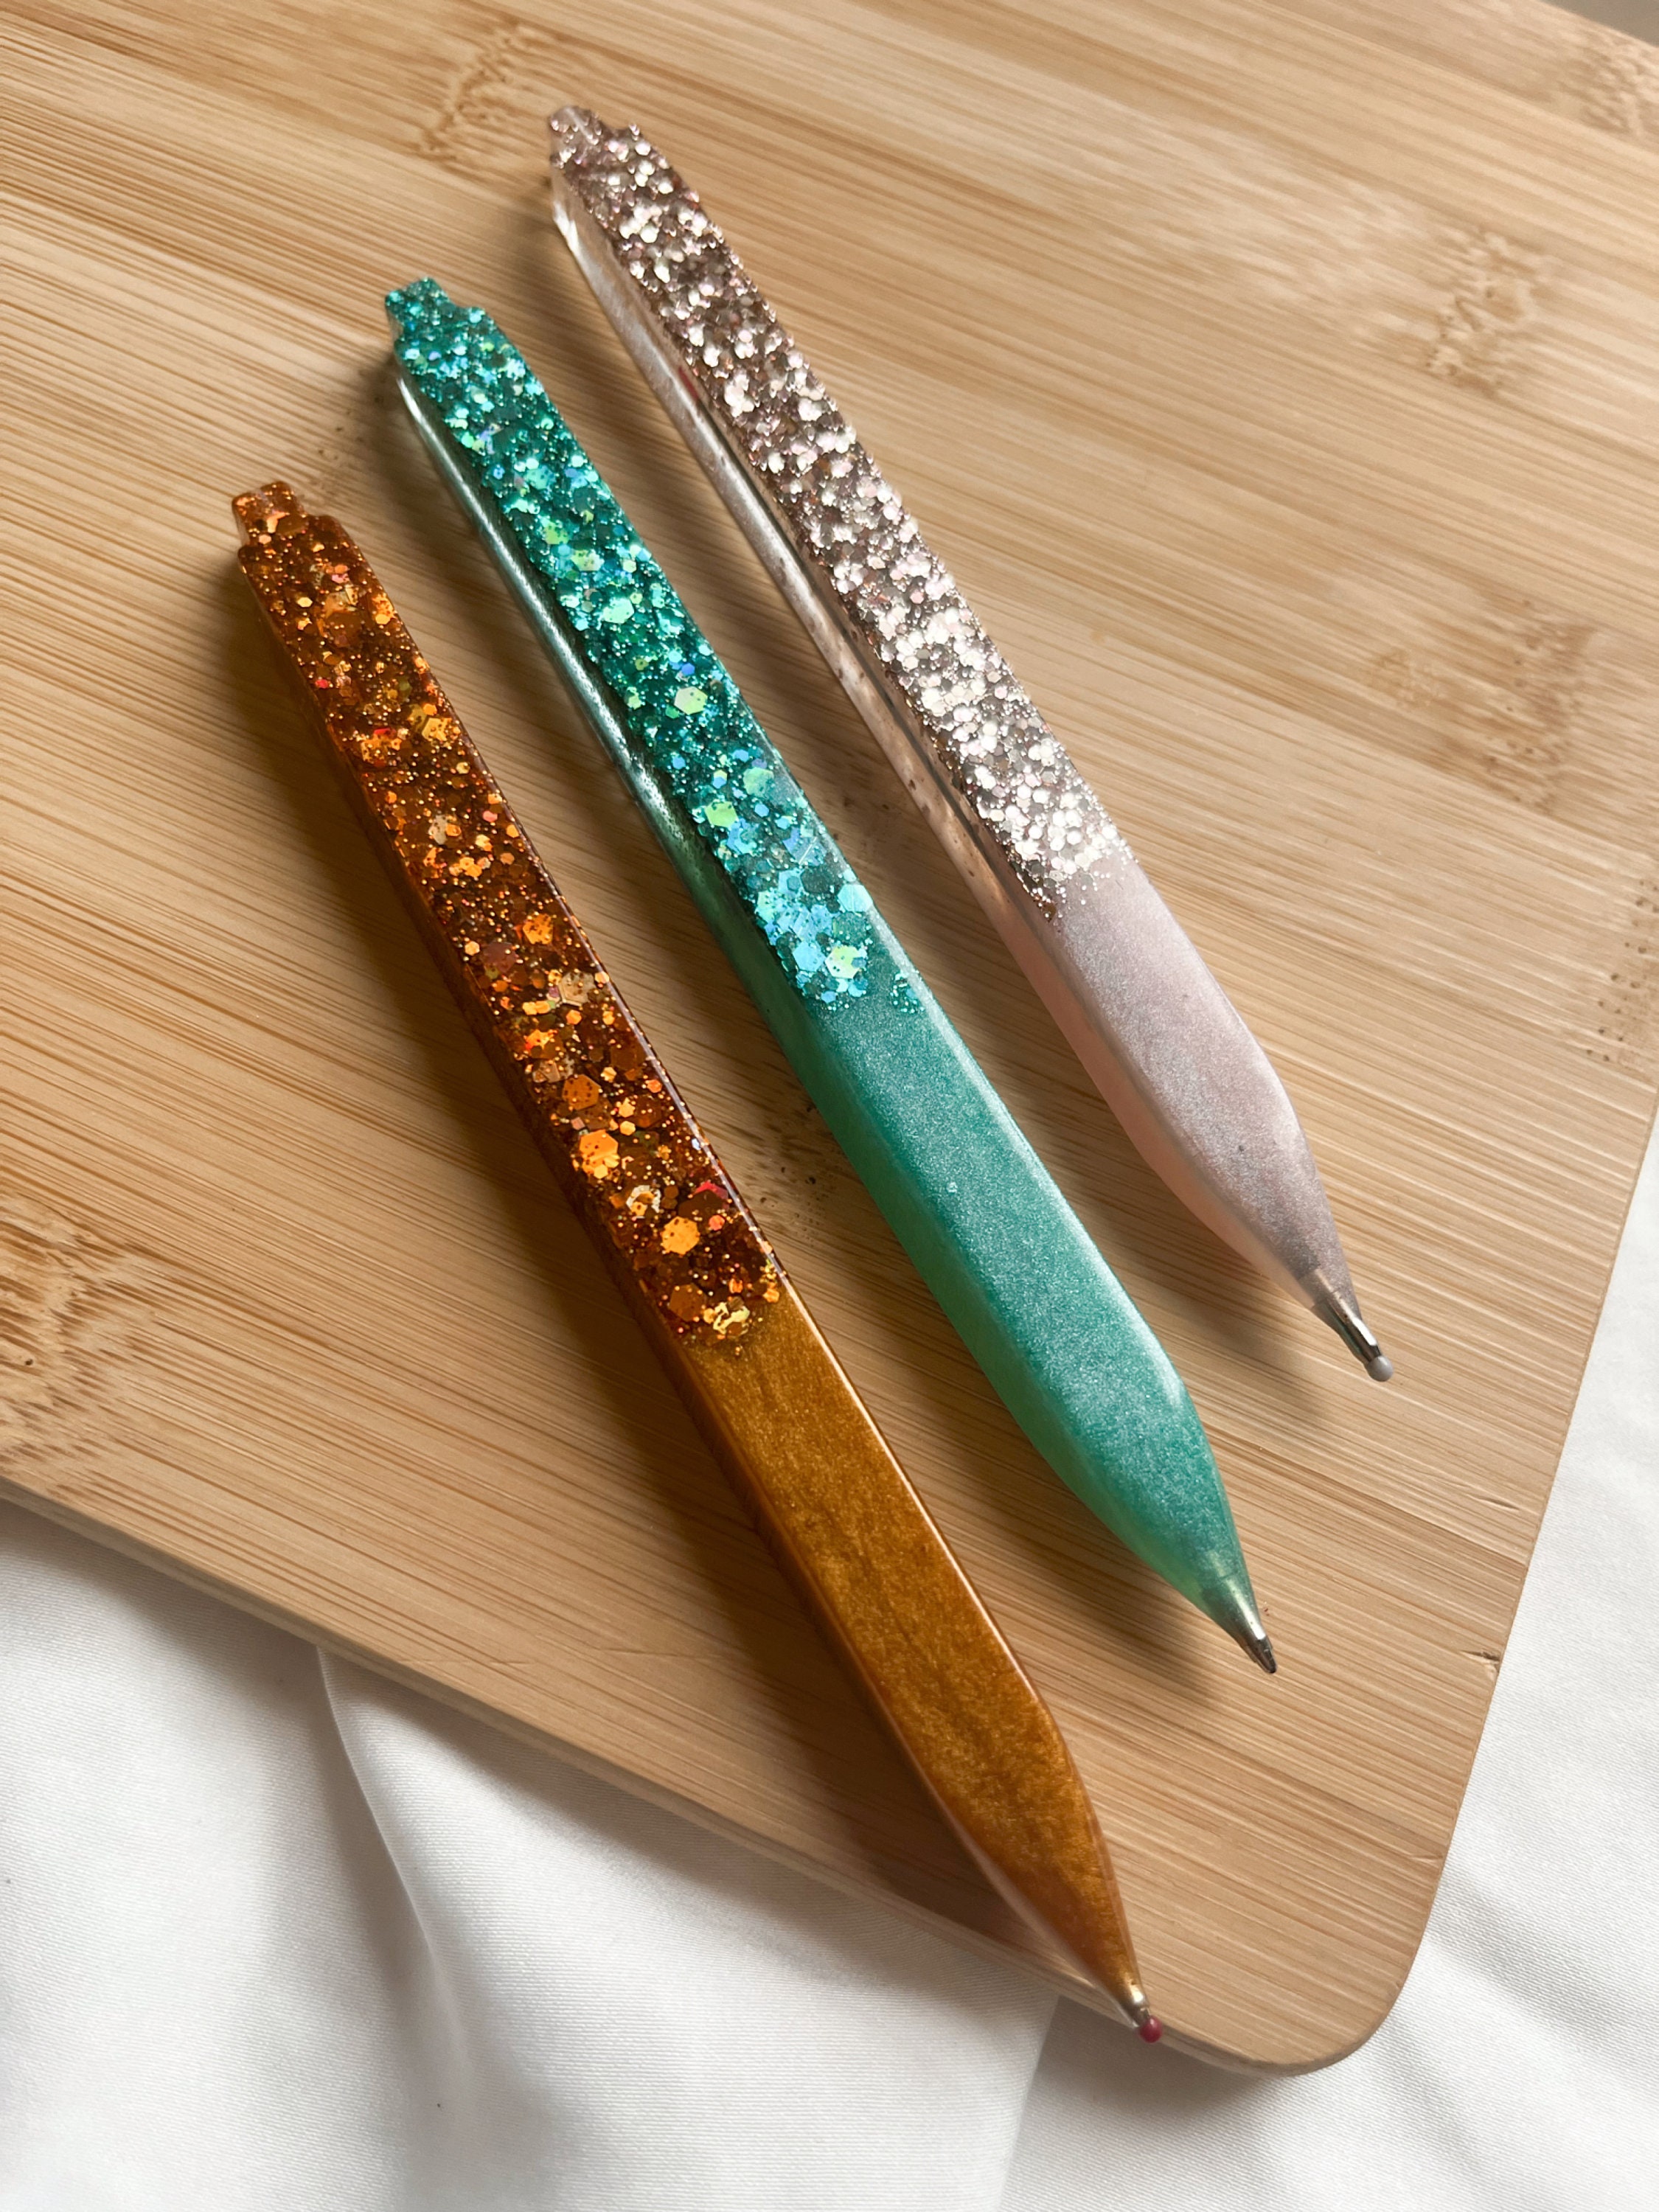 Ombre Glitter Beadable Pens or Black/blue Pen Refills or Pen Bags Plastic 